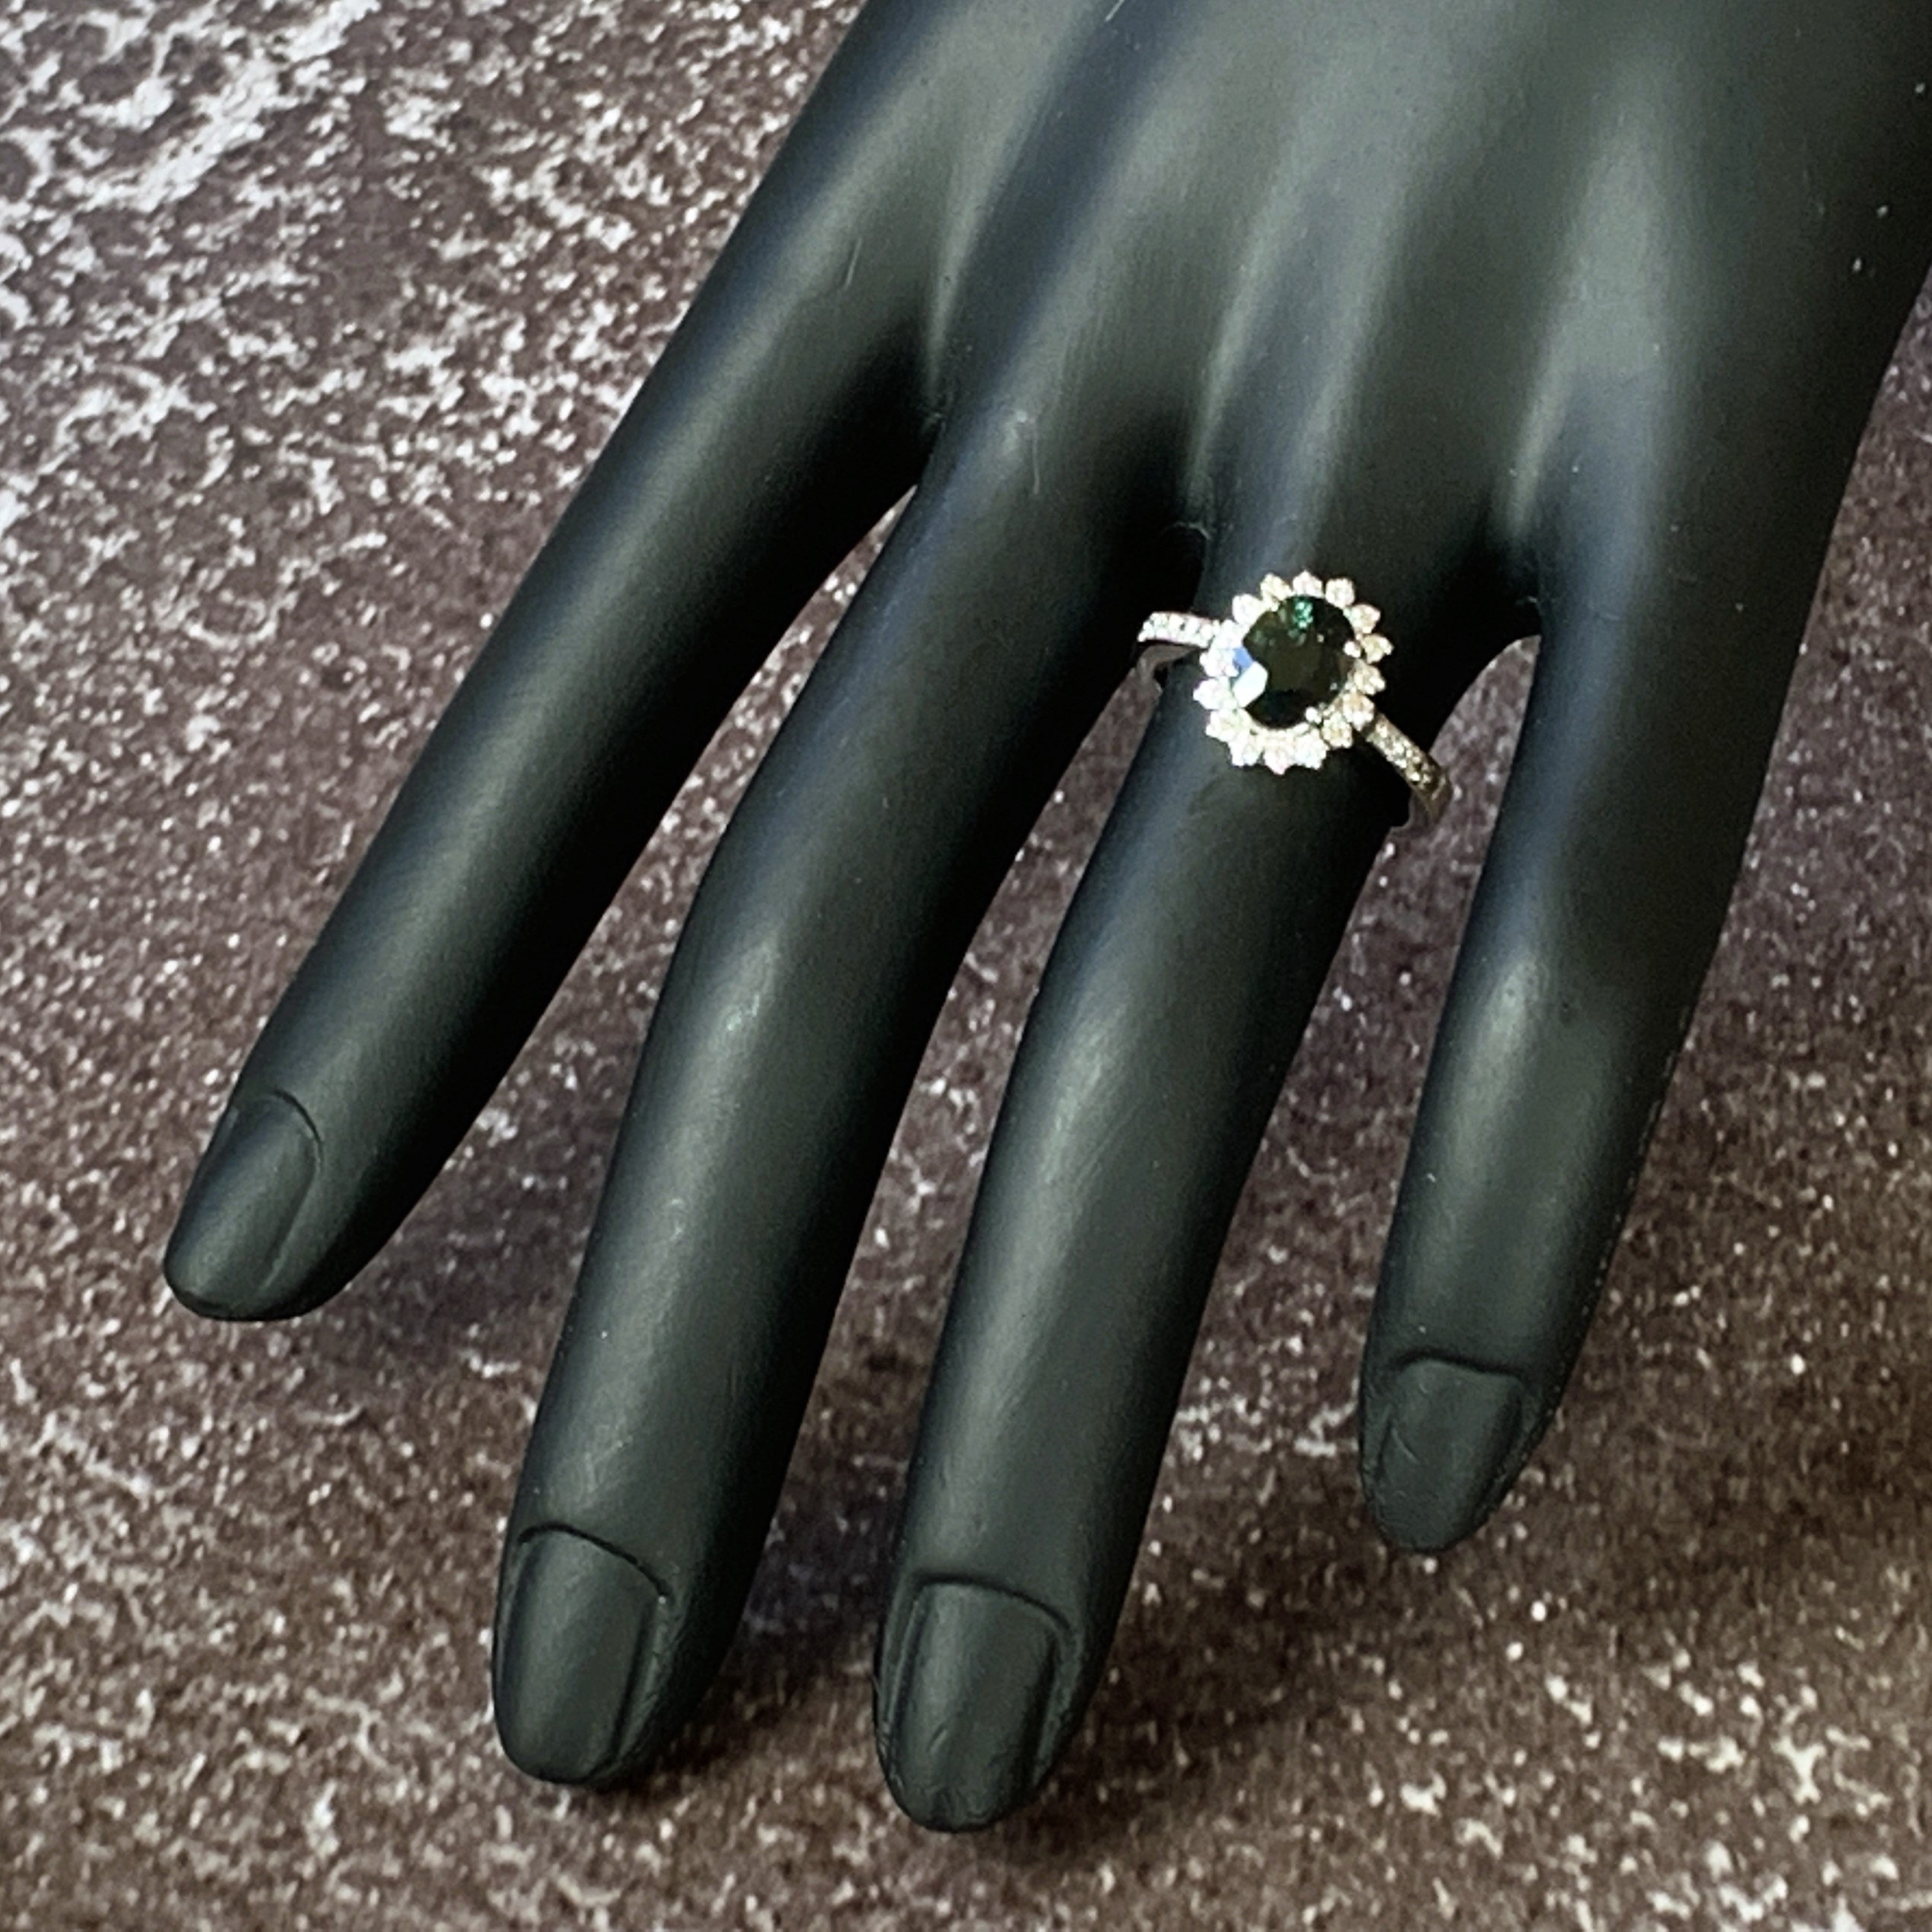 Platinum Teal sapphire 2.07ct and Diamond cluster ring - Masterpiece Jewellery Opal & Gems Sydney Australia | Online Shop